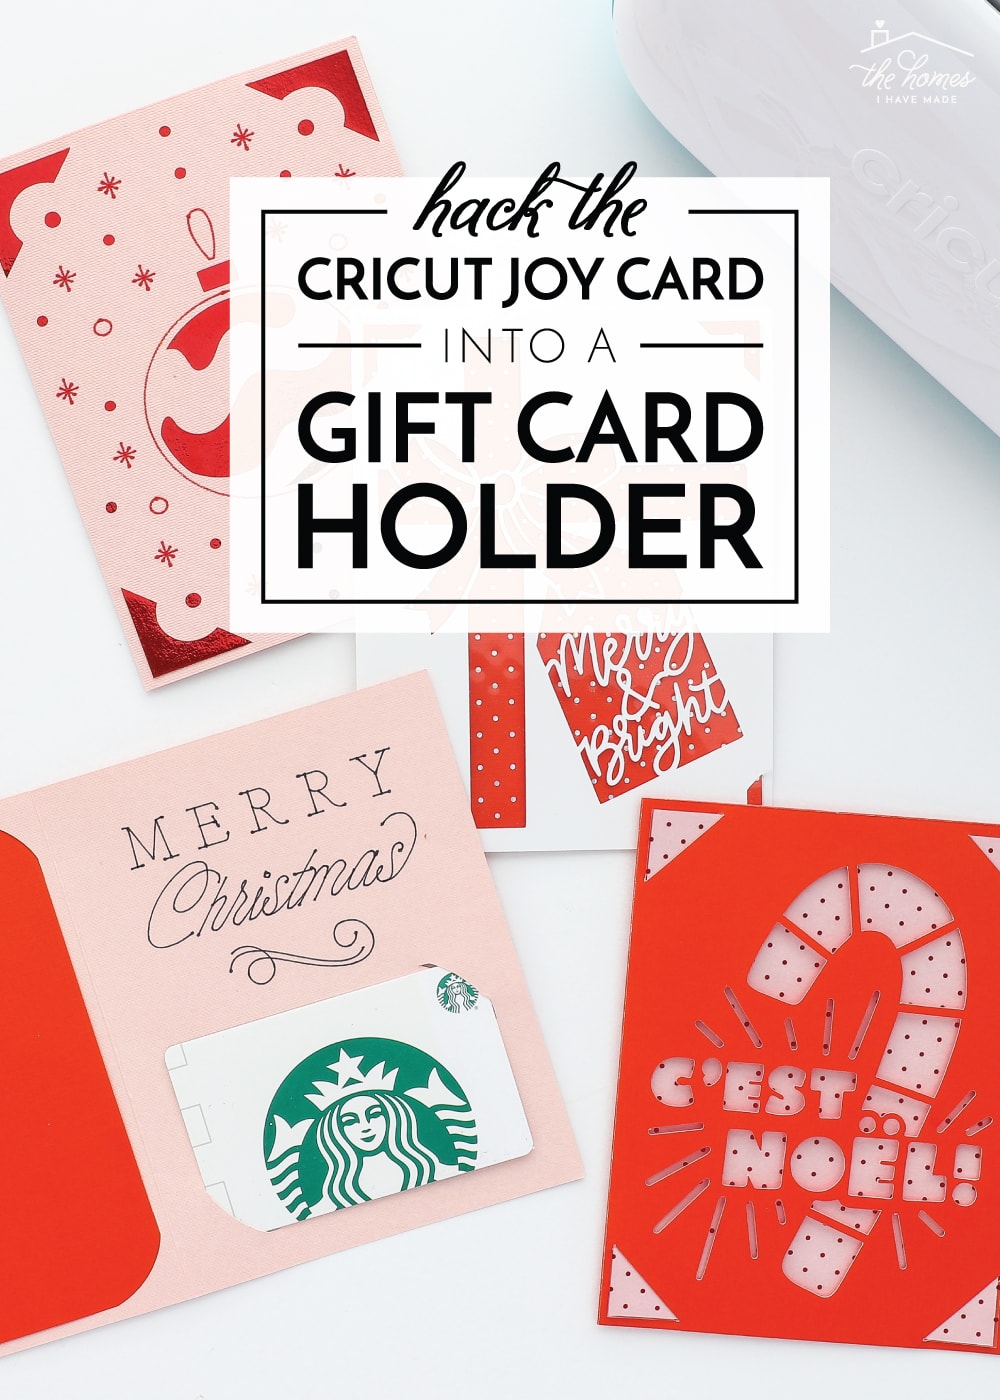 Cricut Joy Card Into a Gift Card Holder